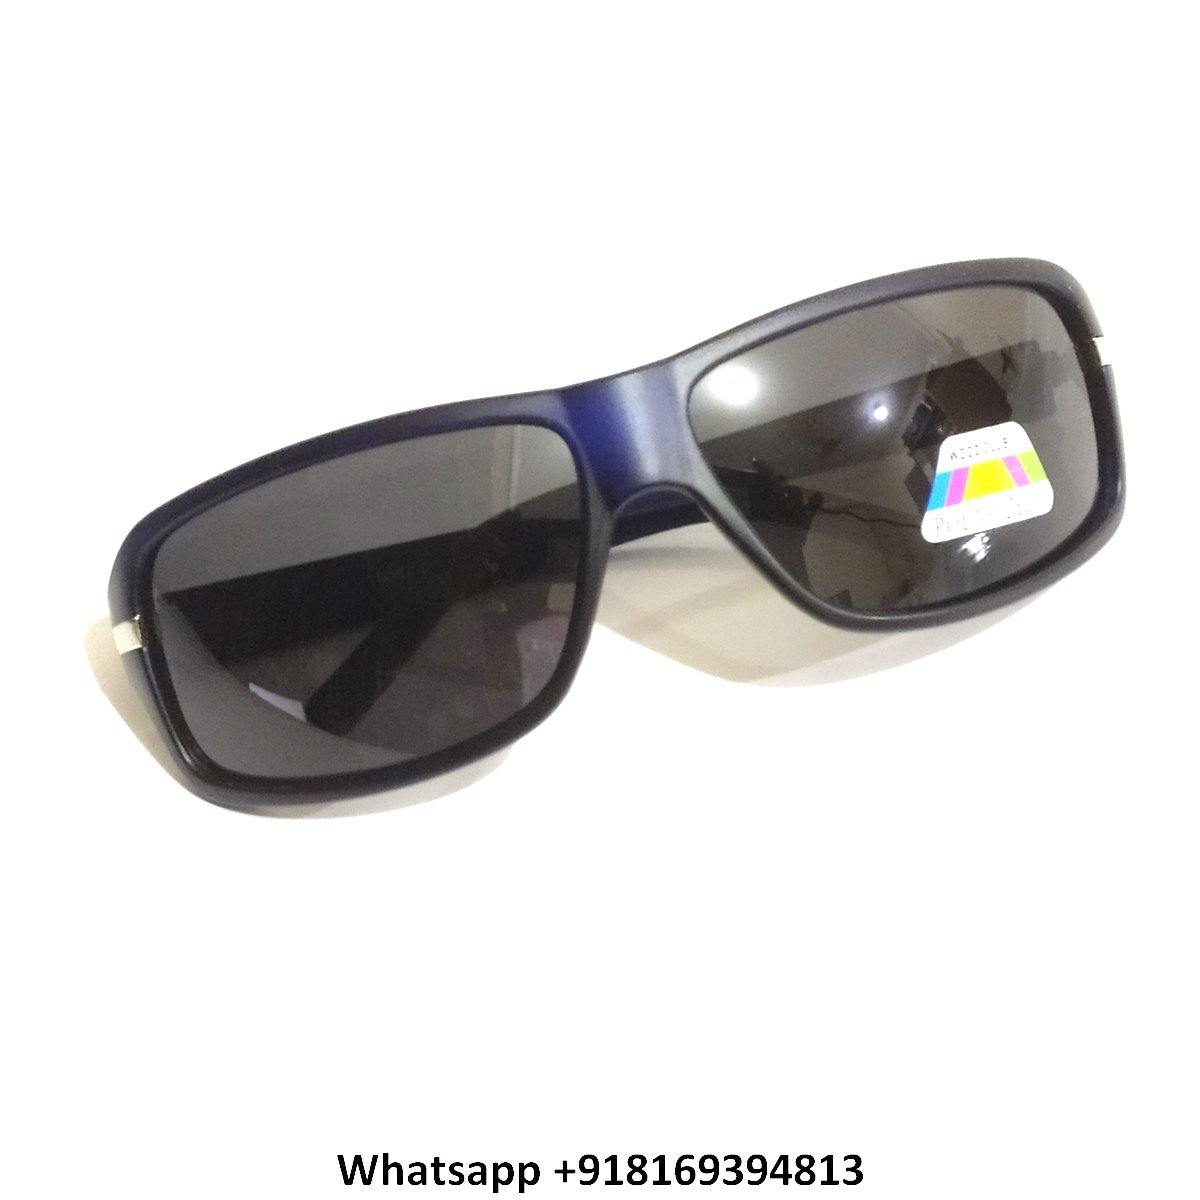 Wraparound Sports Polarized Sunglasses for Men and Women 10067BL - Glasses India Online